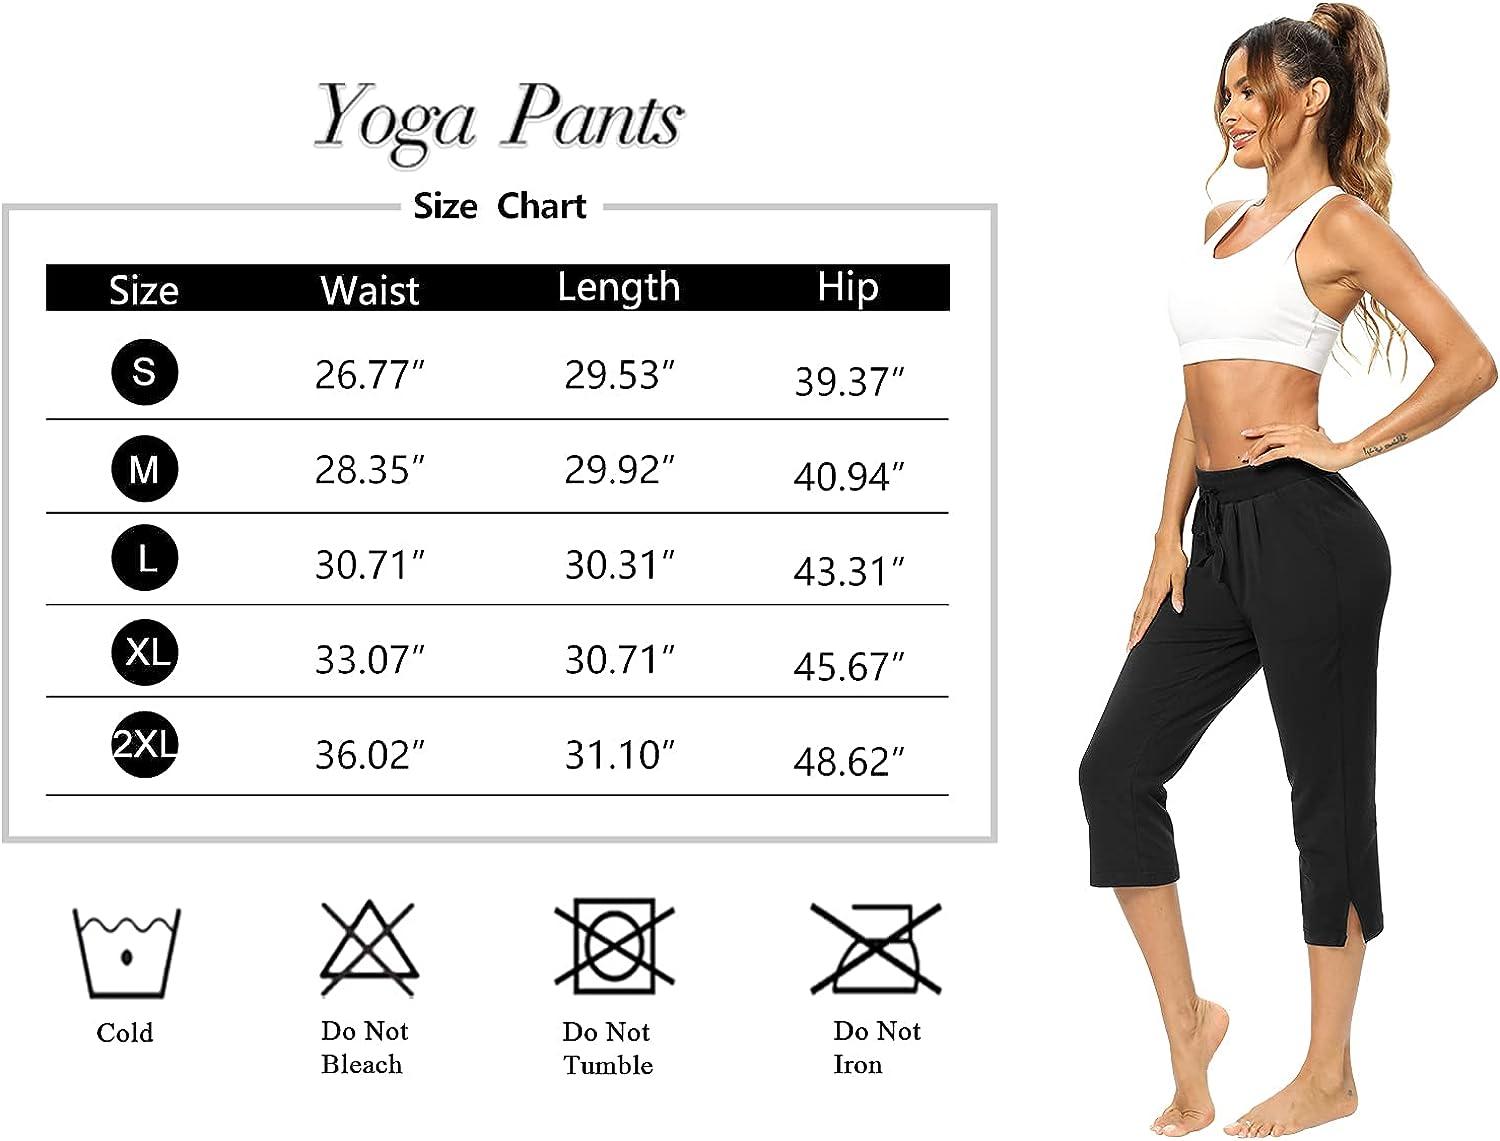  Capri Pants for Women with Pockets Wide Leg Yoga